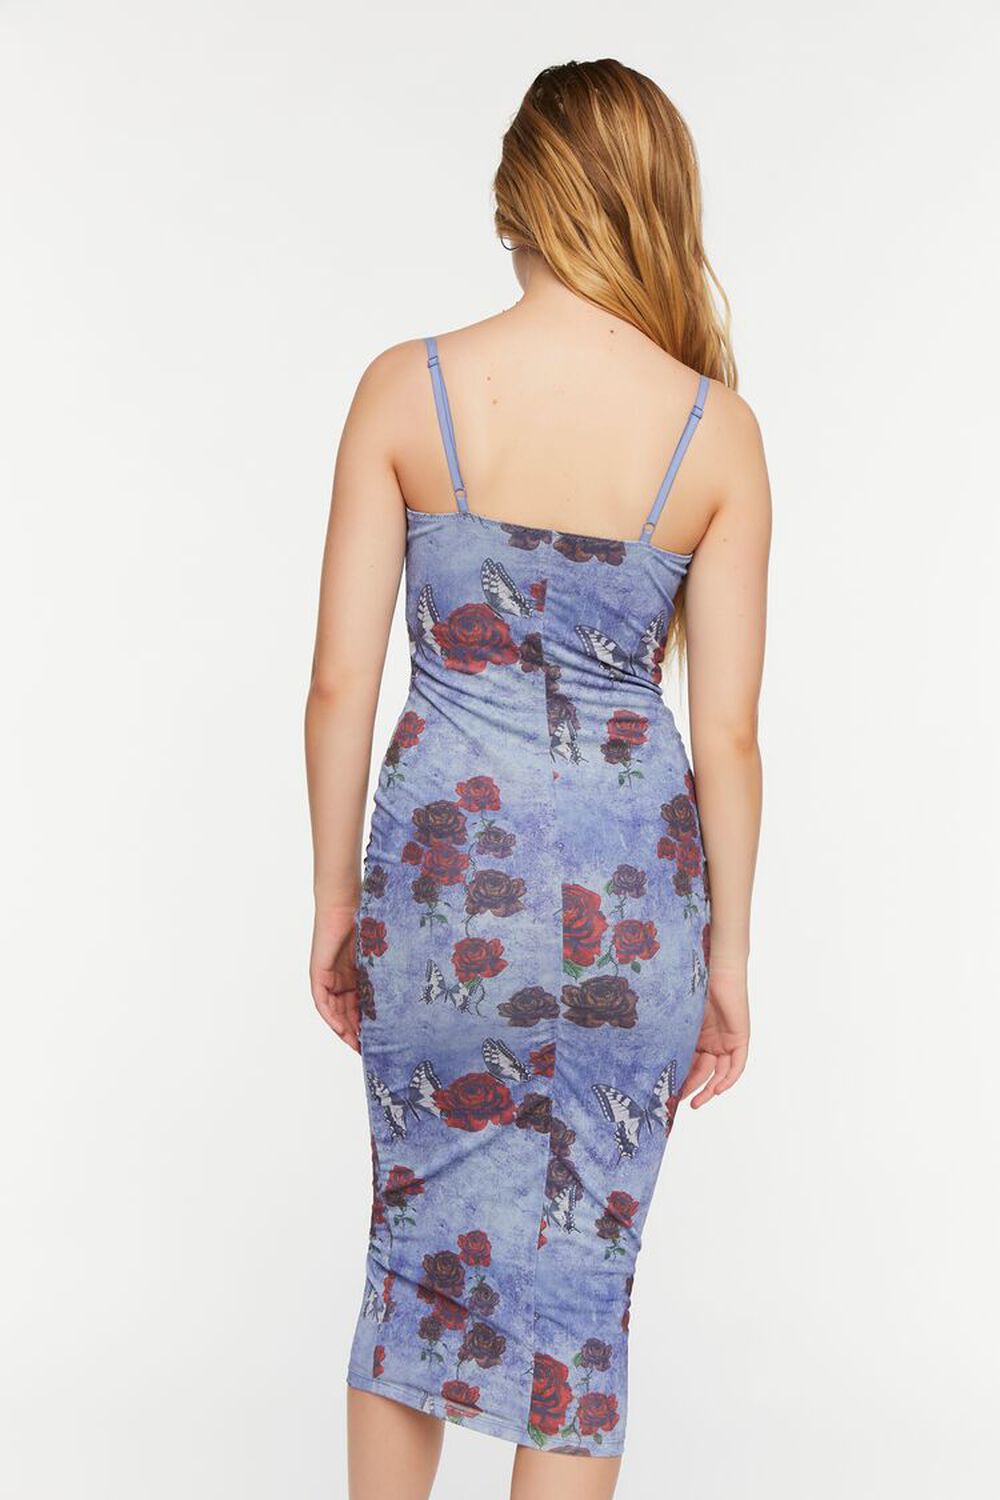 BLUE/MULTI Mesh Butterfly Rose Print Cami Dress, image 3